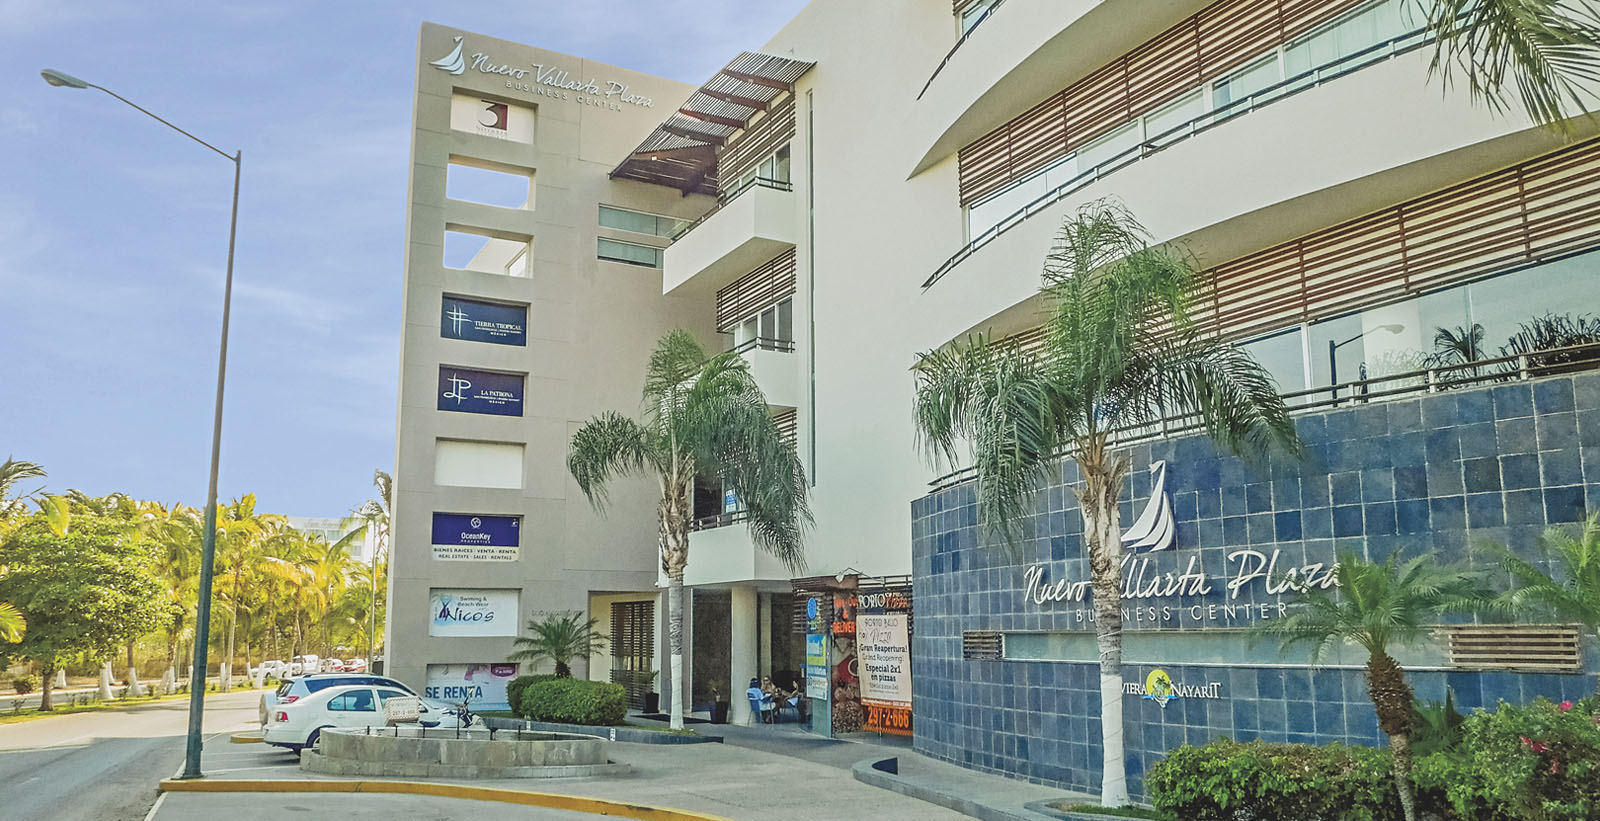 Nuevo Vallarta Plaza Business Center 